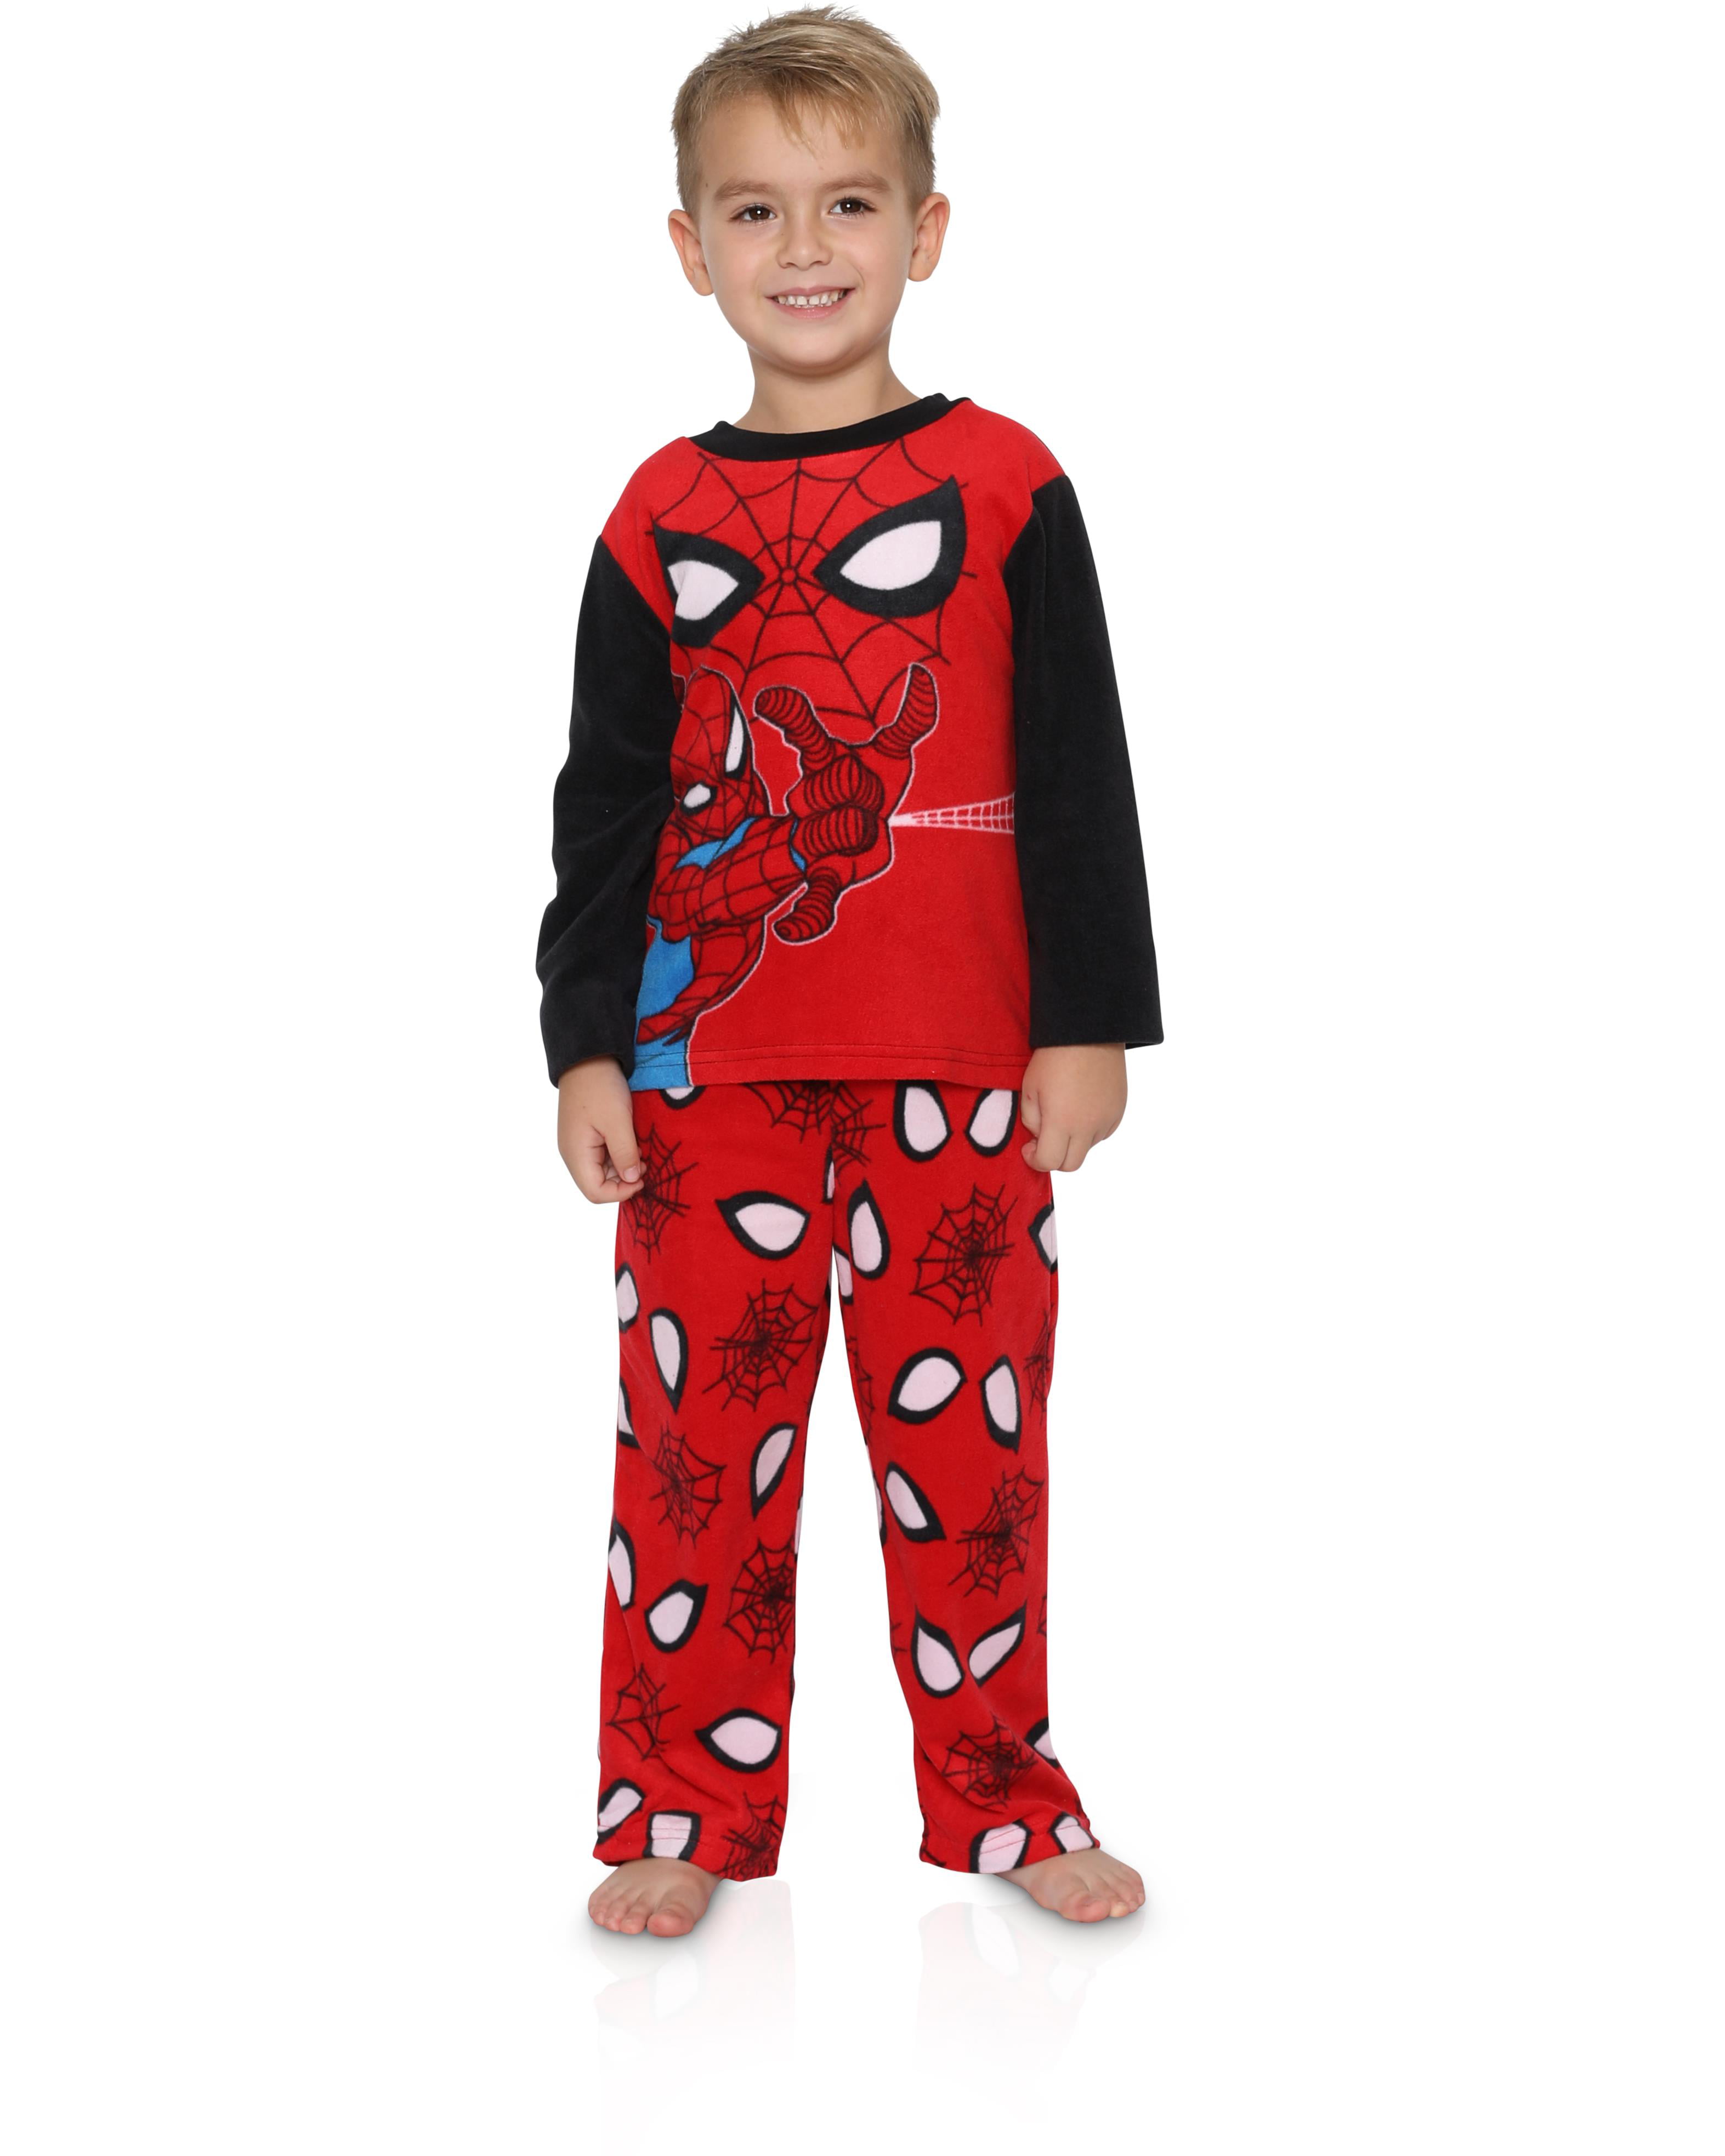 Boys 2 Piece Fleece Sleepwear Pajama Set Spiderman Size 4/5 XS Blue Top Red Pant 